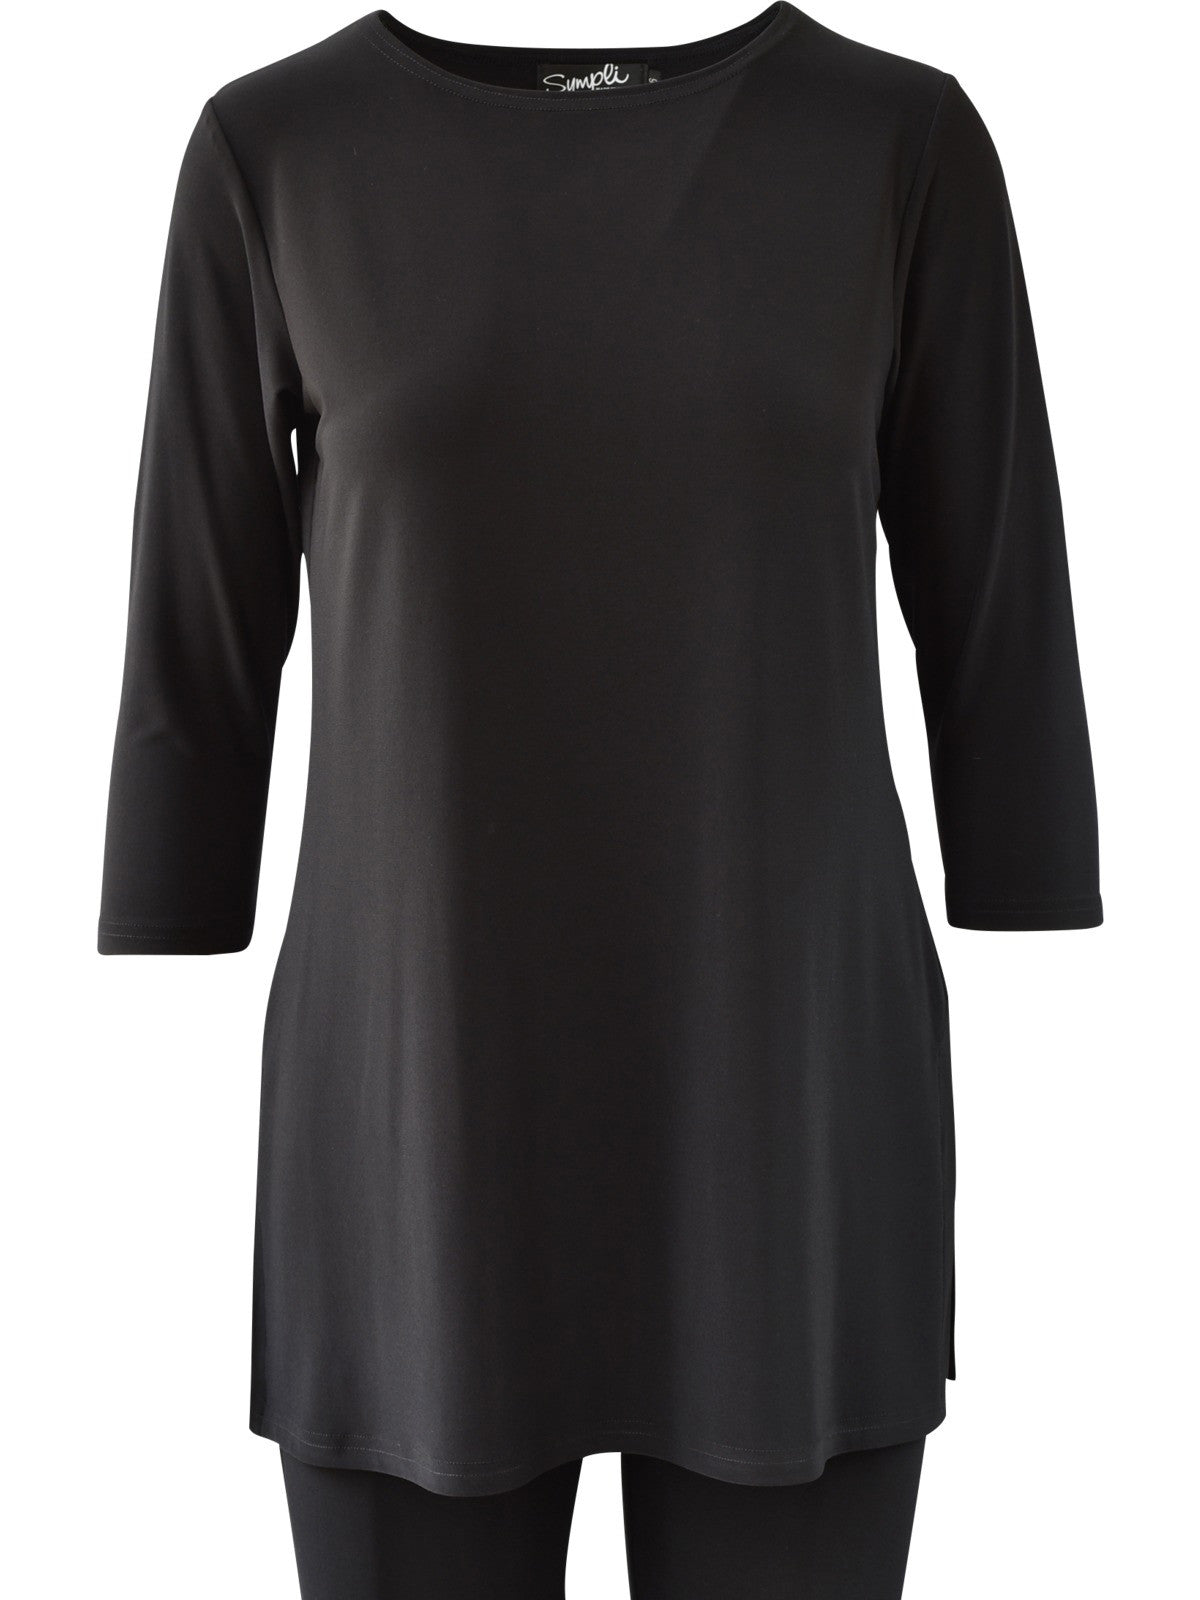 Sympli Nu Ideal Tunic 3/4 Sleeve - Black - Statement Boutique